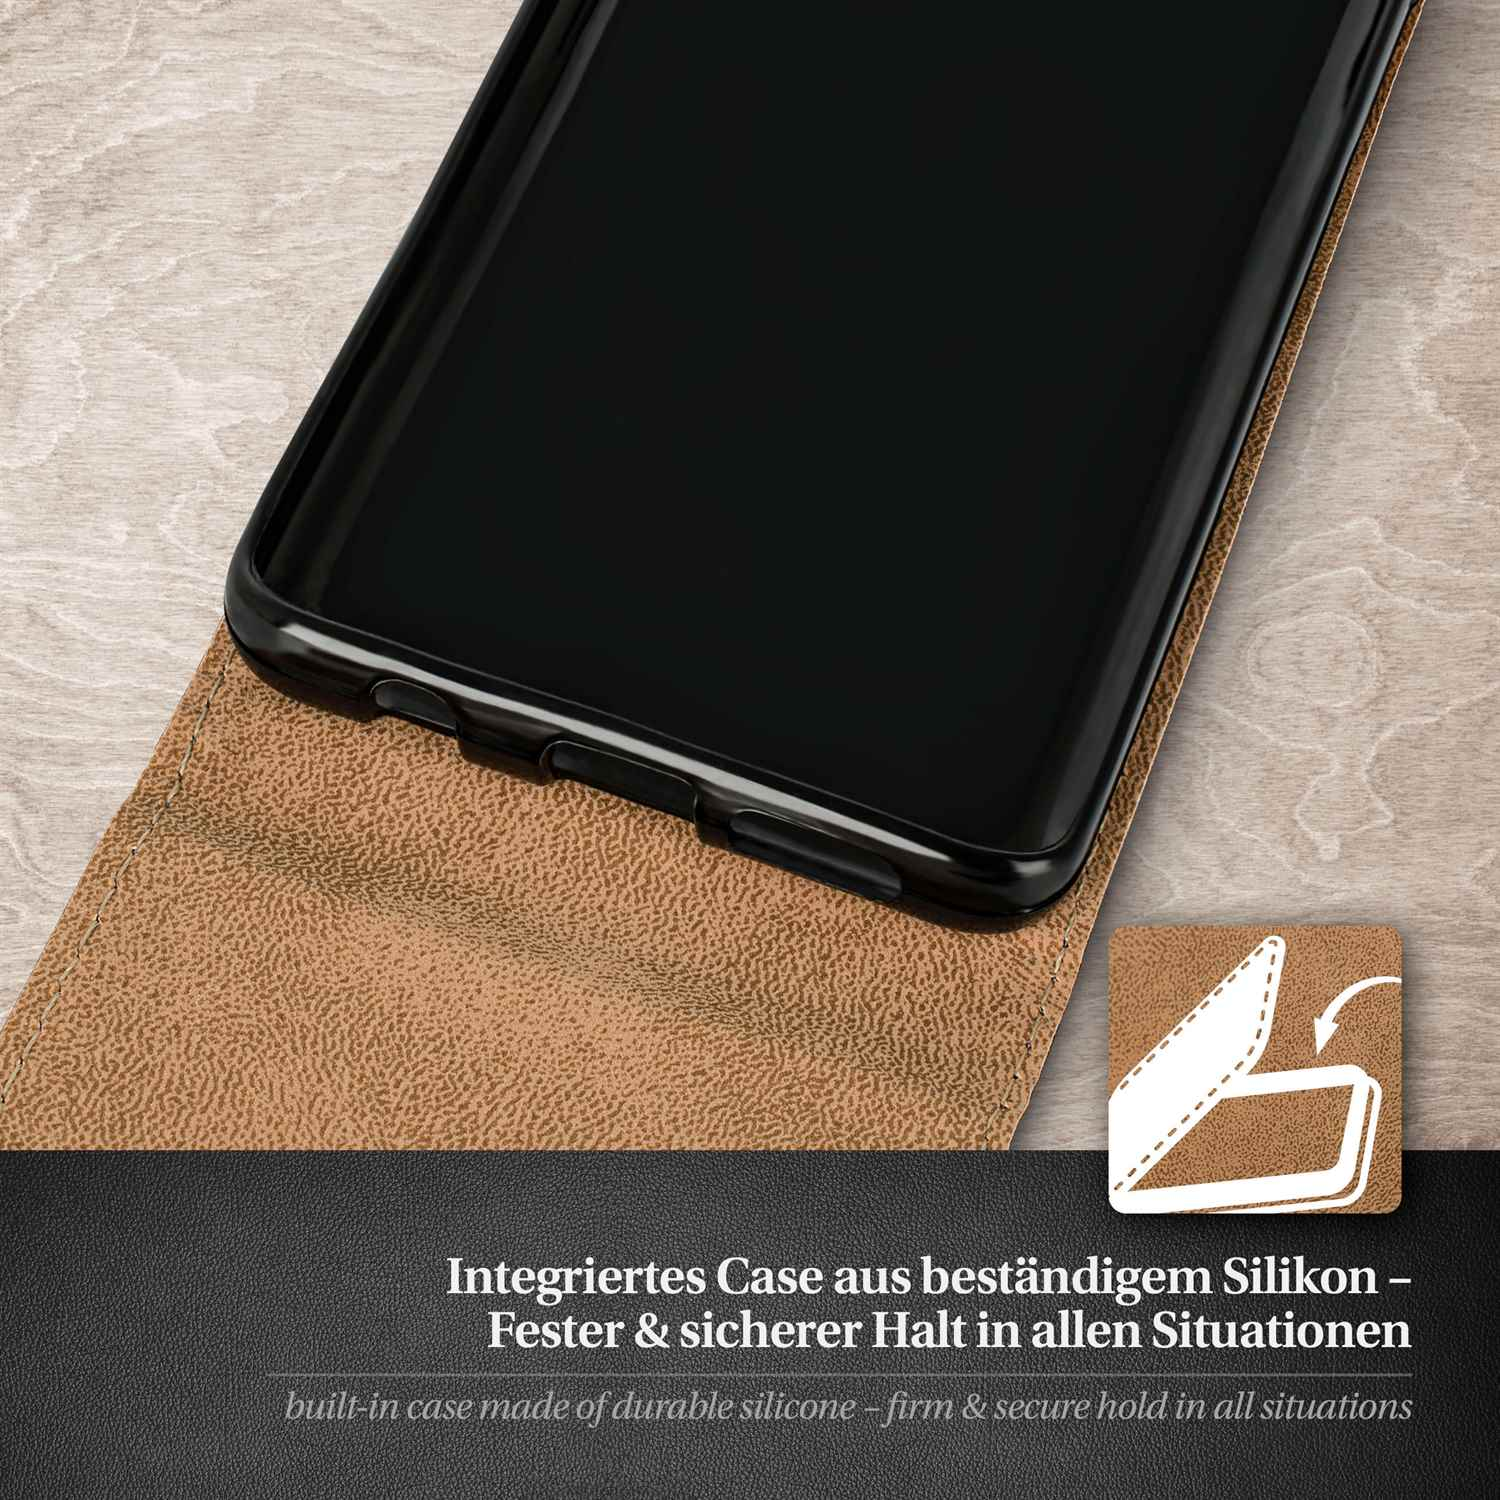 Cover, Indigo-Violet 5G, MOEX Flip Flip Case, S20 Samsung, Galaxy Plus